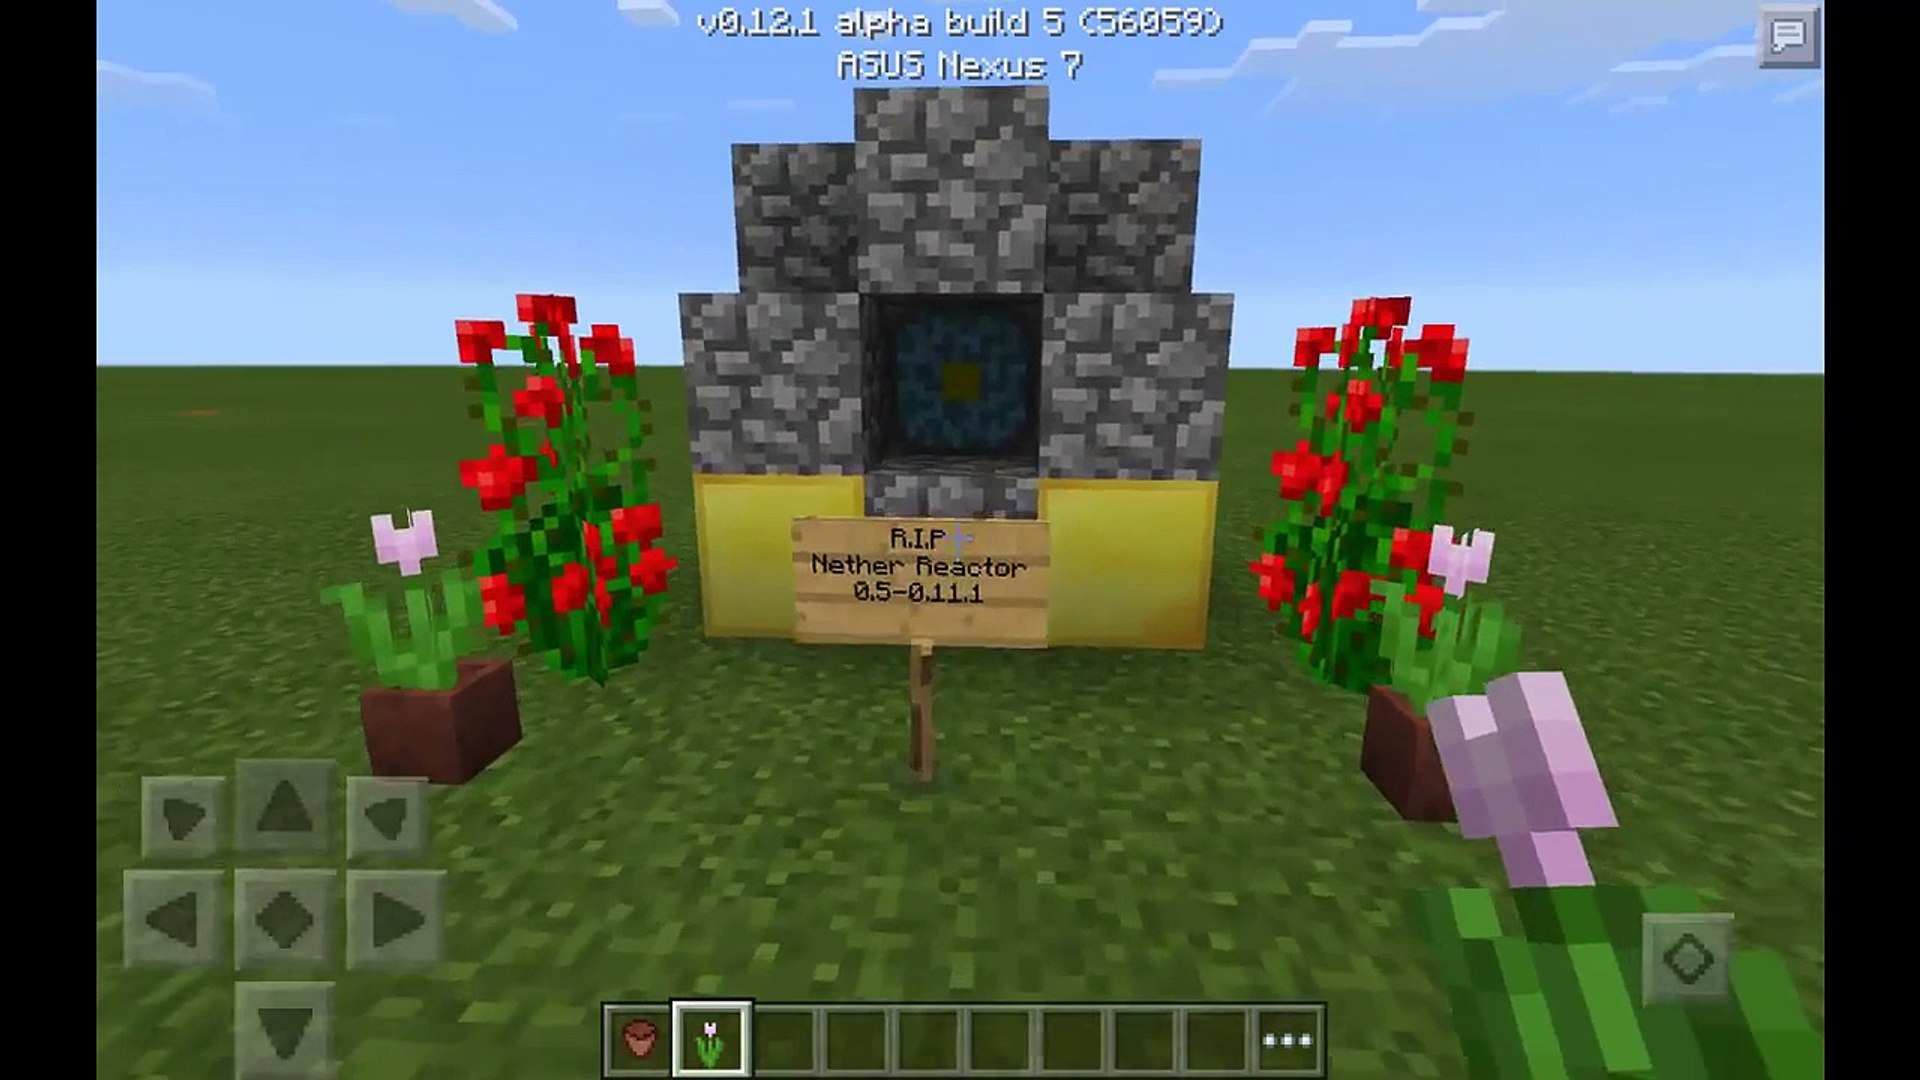 Minecraft Pe 0 12 1 R I P Nether Reactor Savethenetherreactor Video Dailymotion